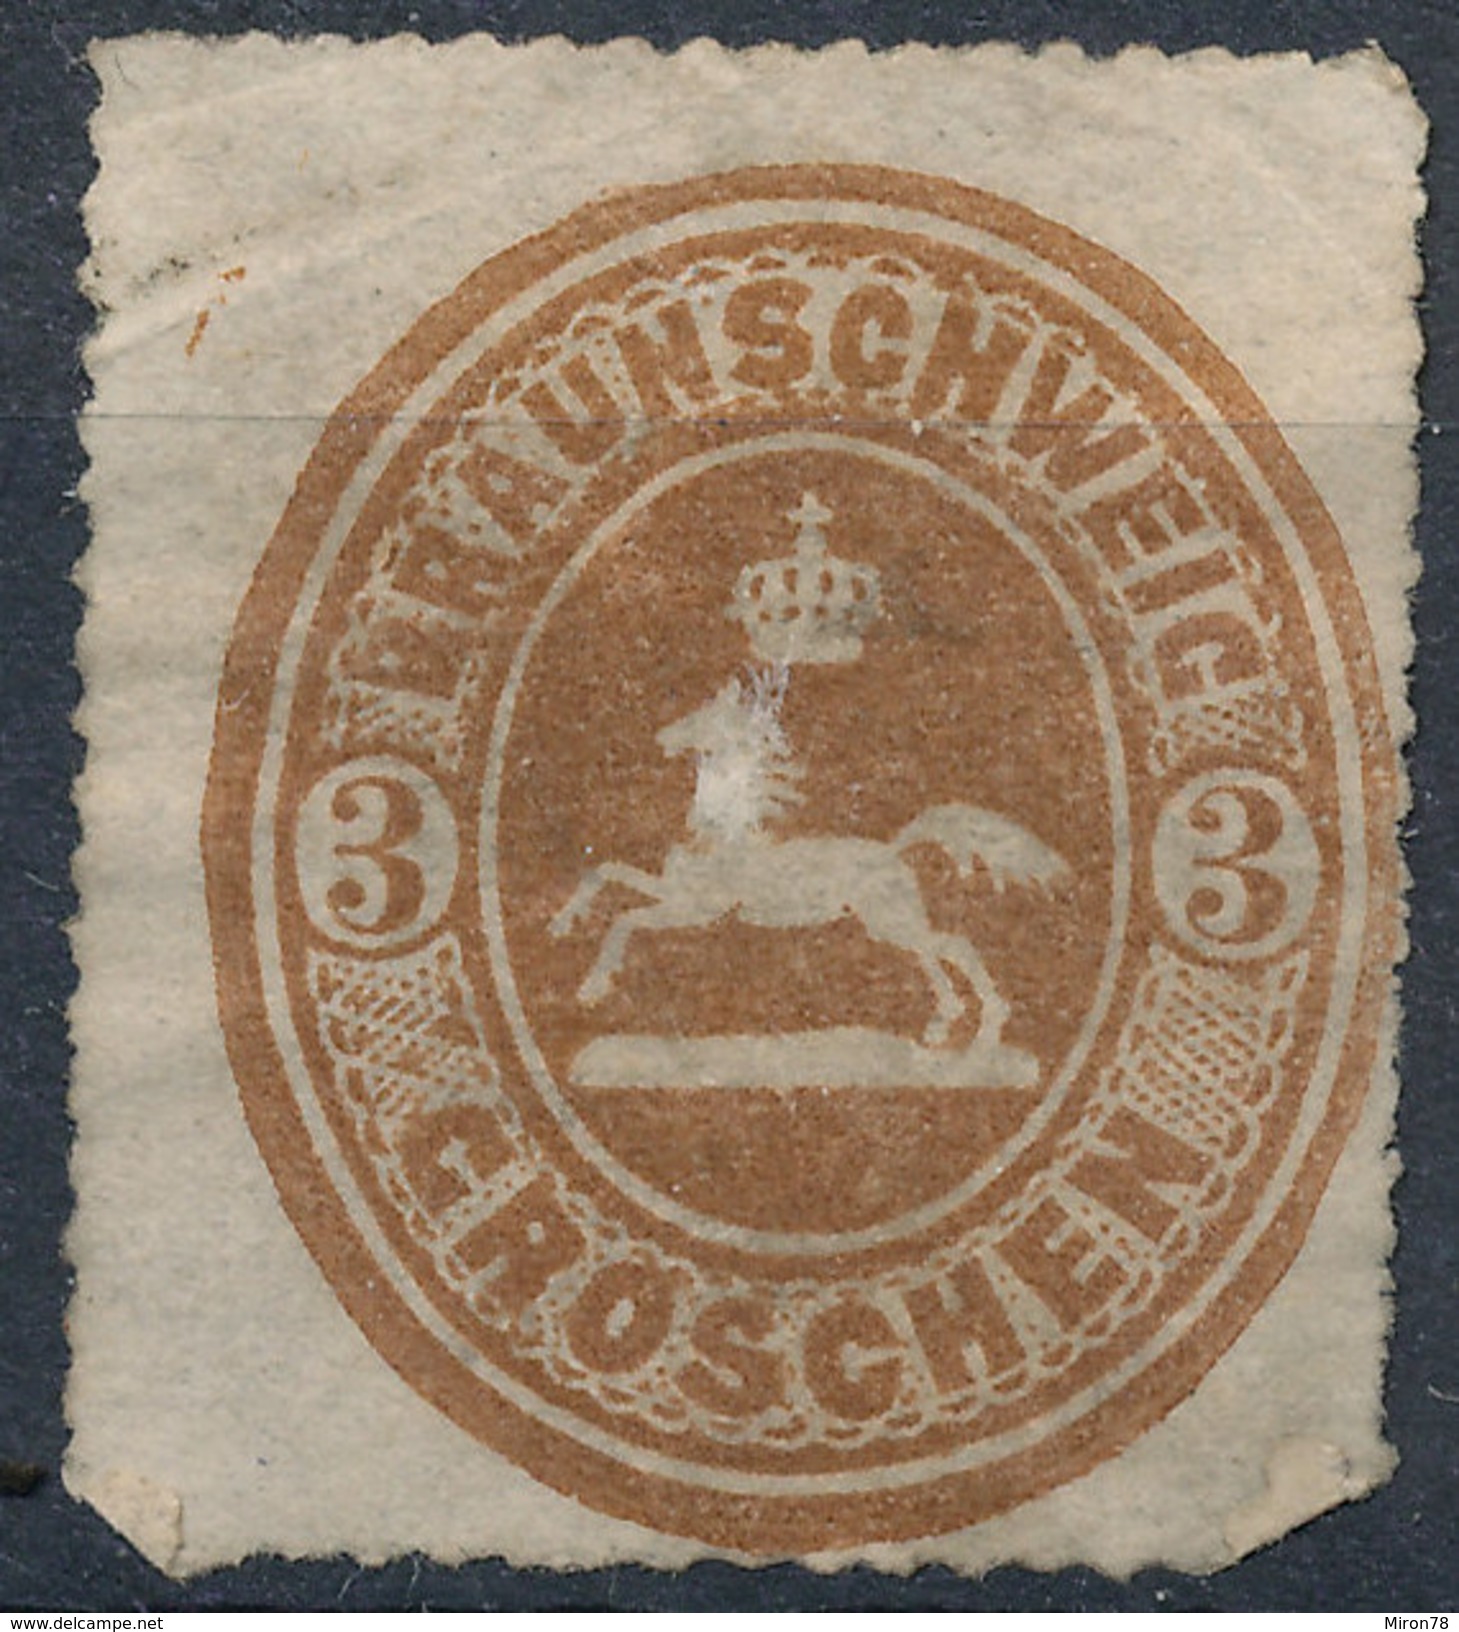 Stamp   1865 3gr  Mint - Brunswick